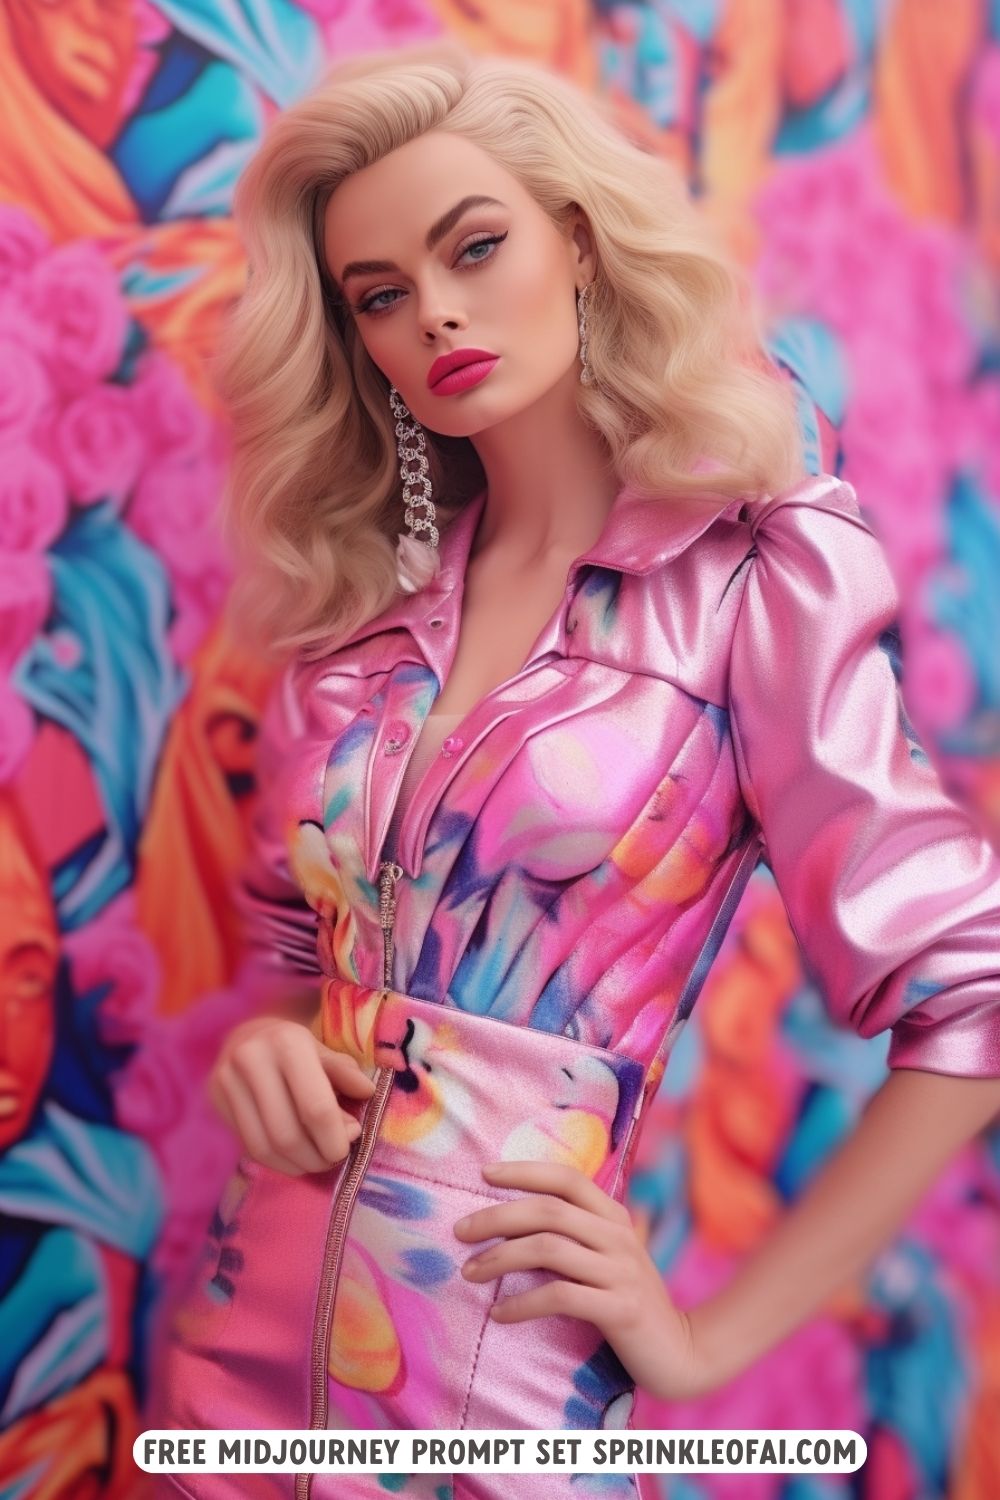 Free Midjourney Prompt Set - Barbie Margot Robbie Prompts - Barbie Movie Midjourney - Midjourney for Beginners - Sprinkle of AI